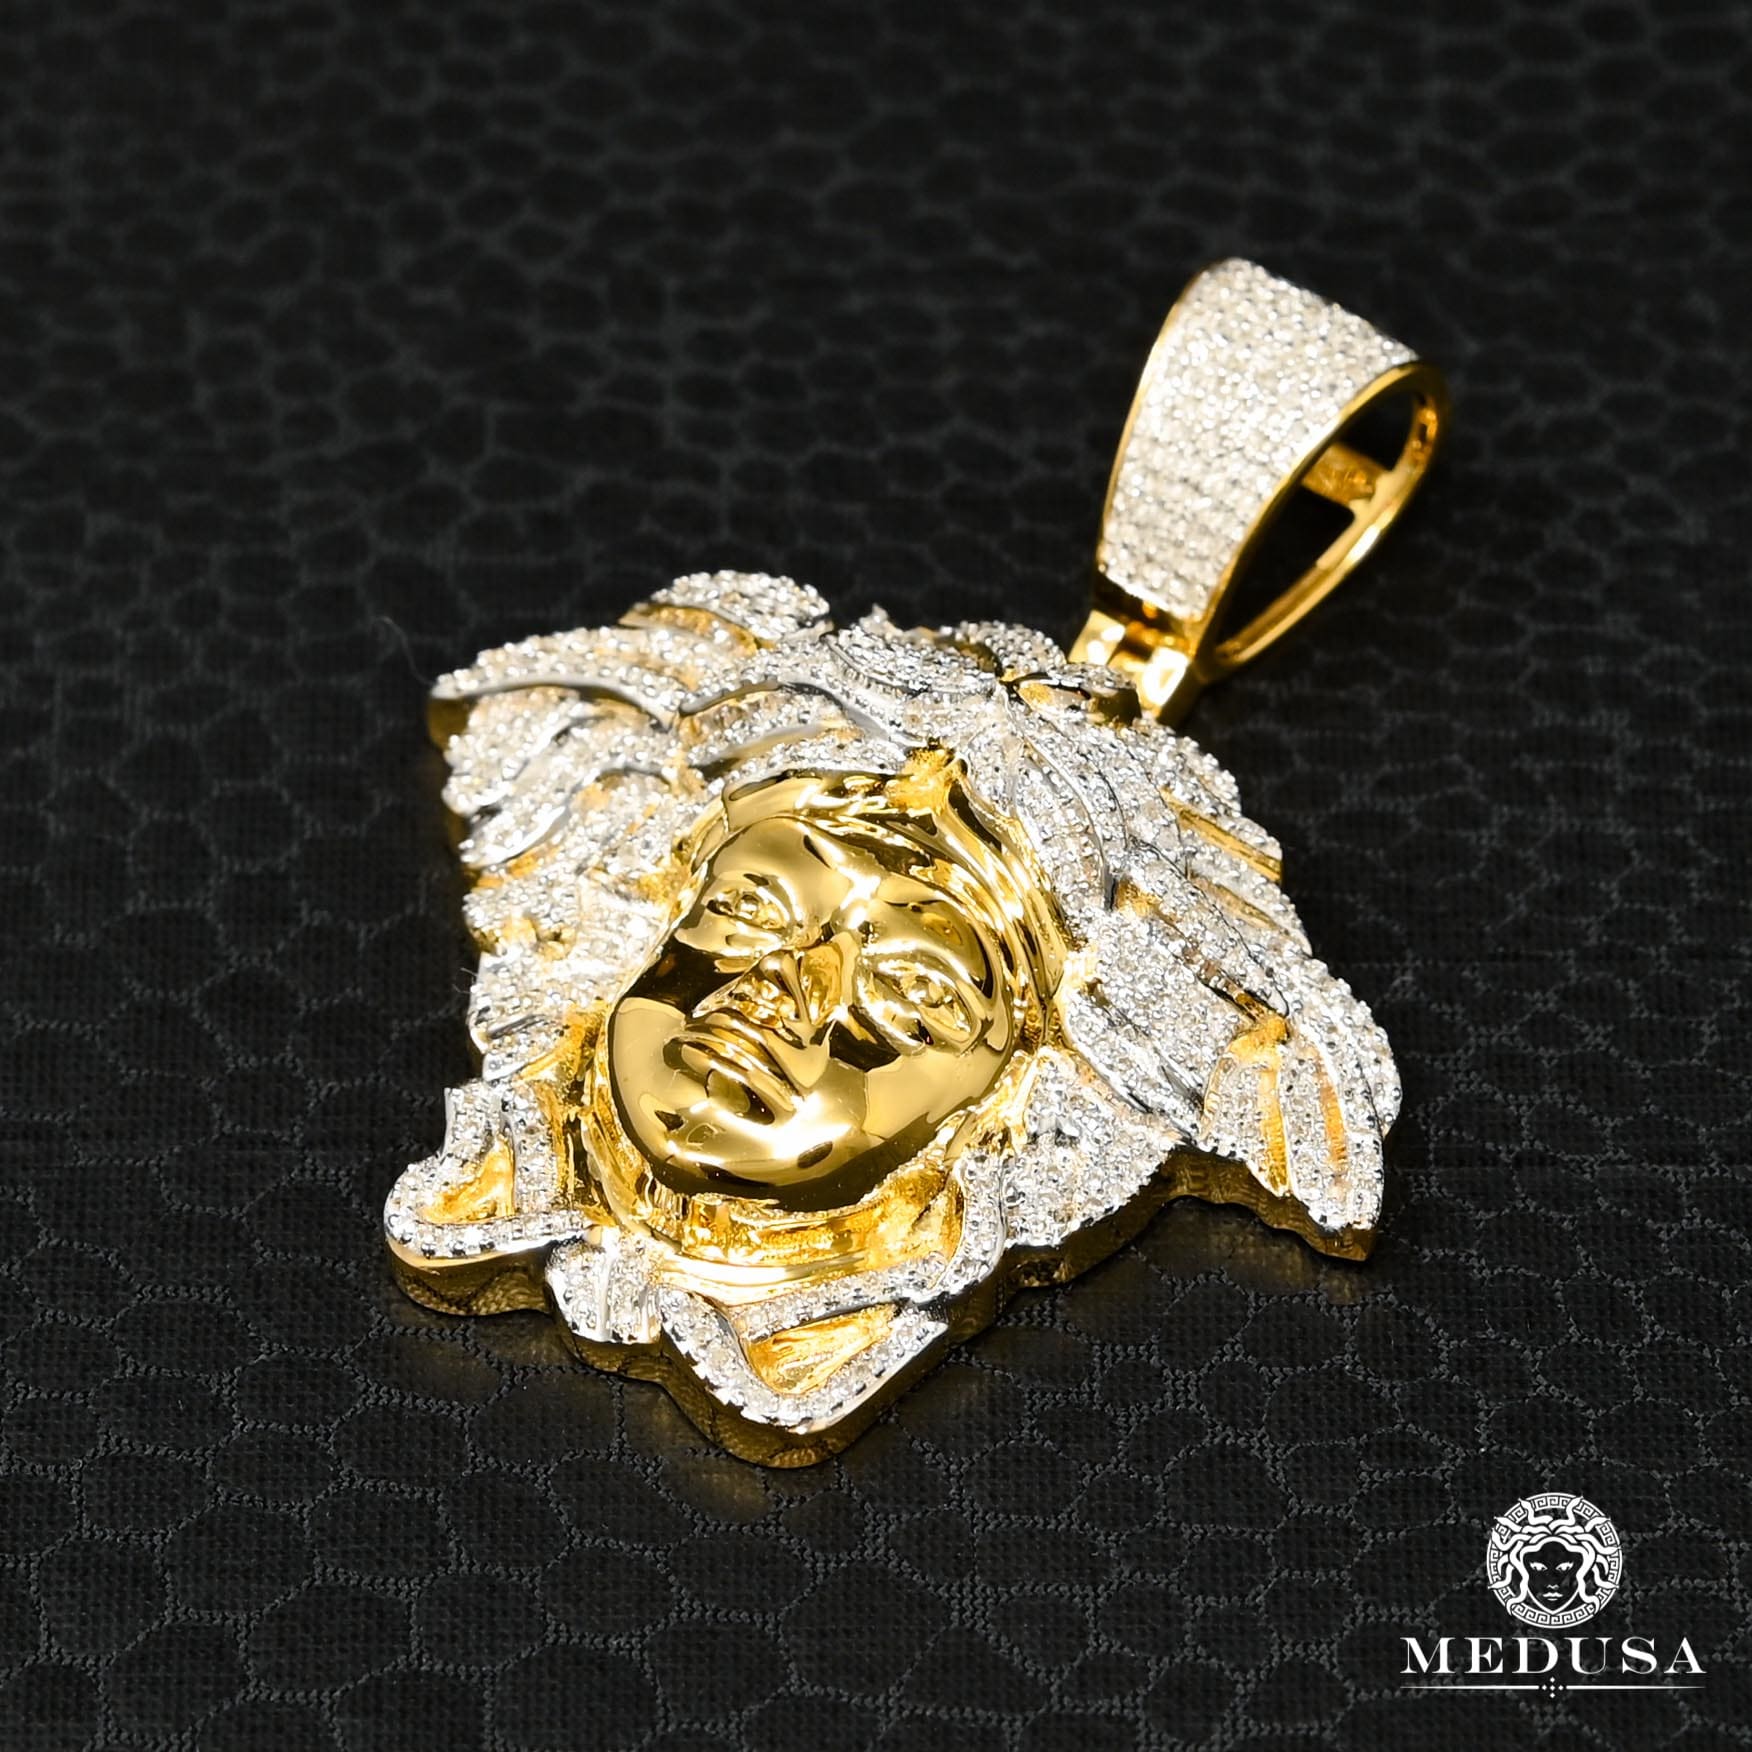 10K Gold Diamond Pendant | Miscellaneous Athena D4 Pendant - 2 Tone Gold Diamond